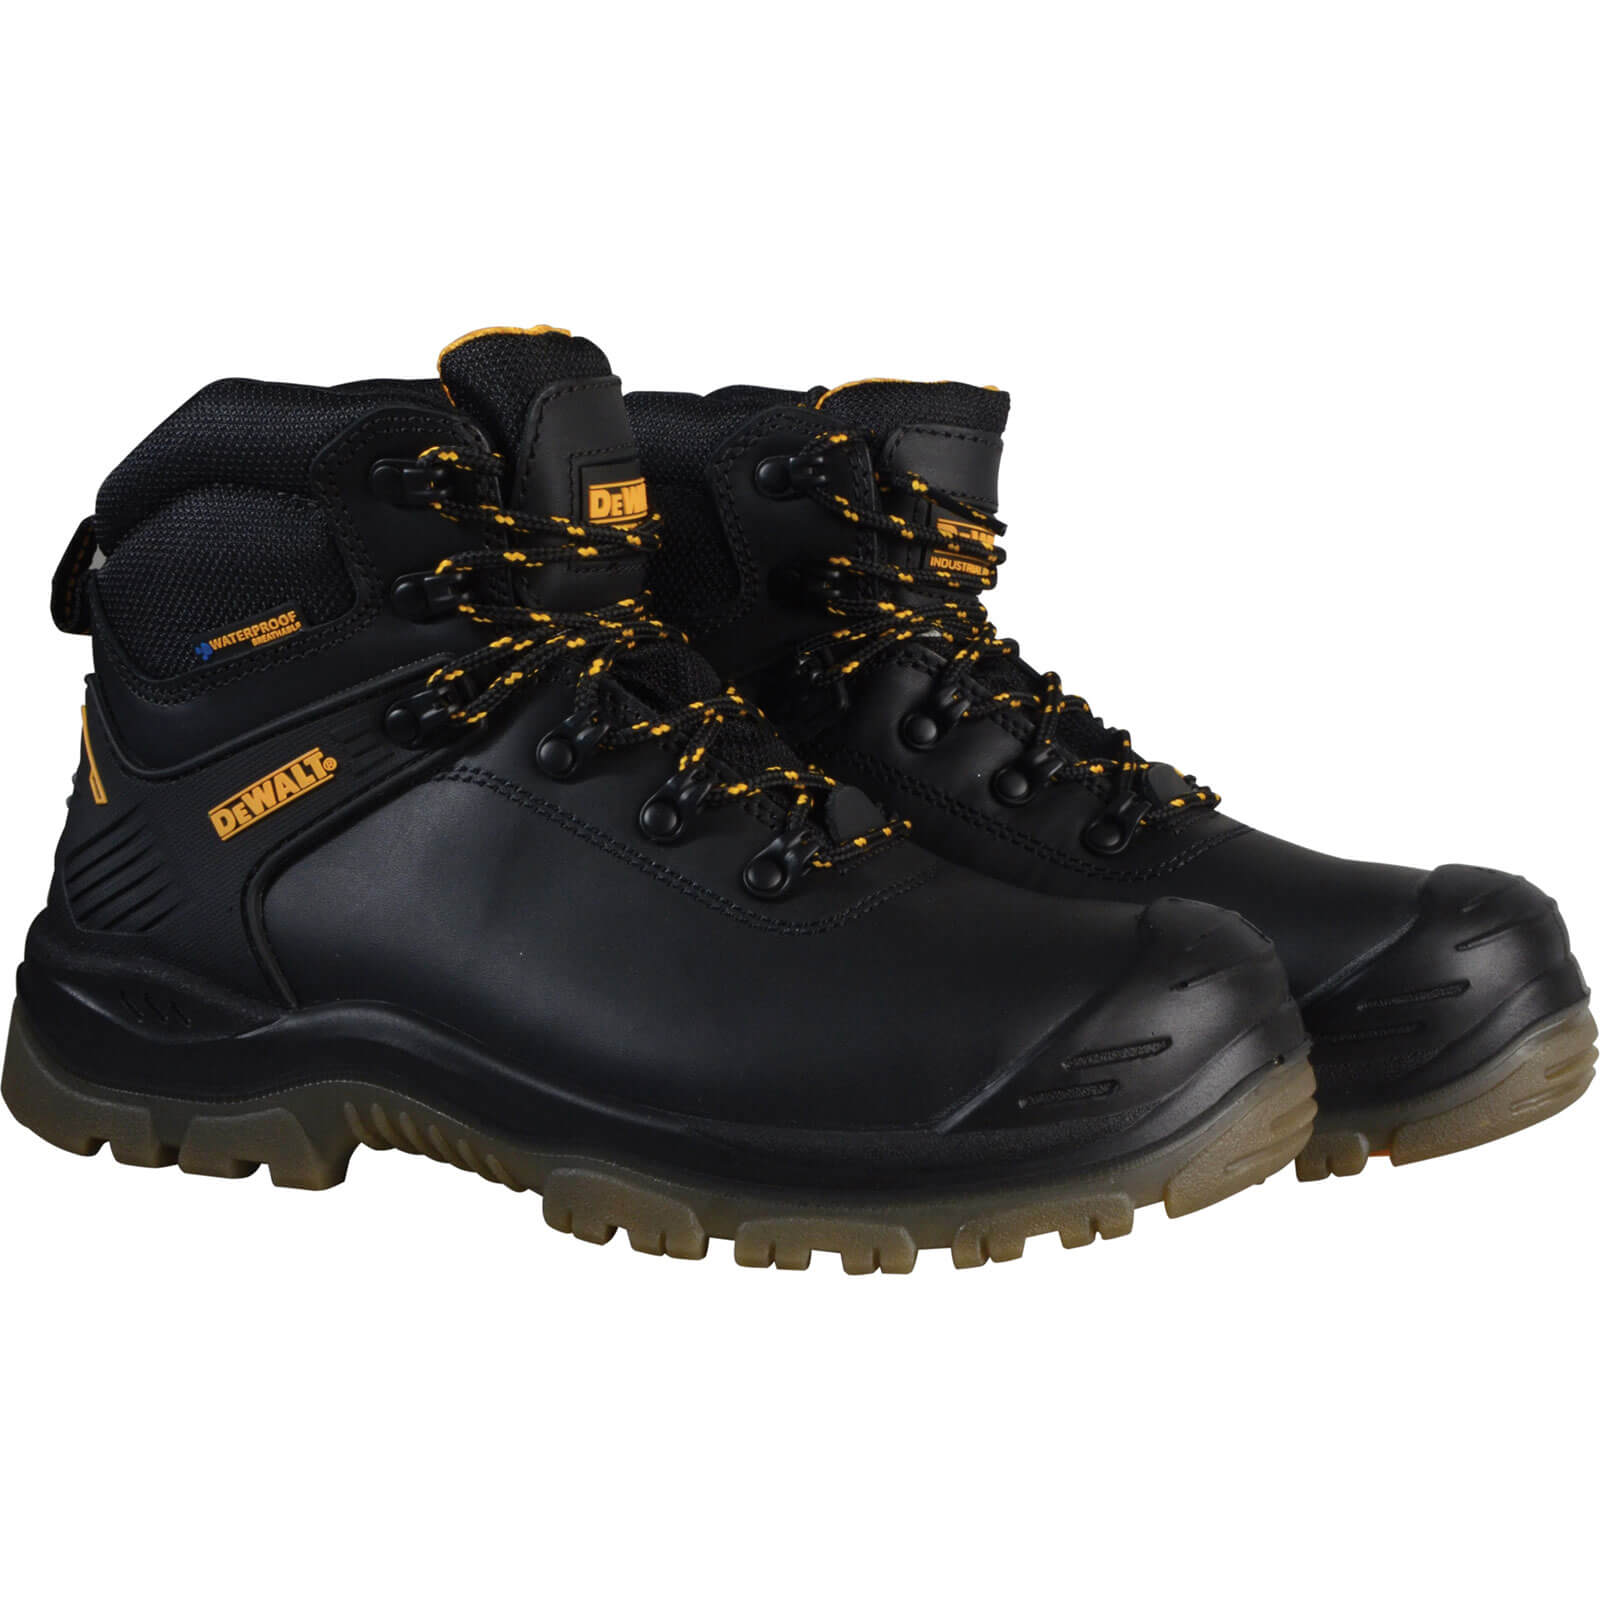 DeWalt Newark Waterproof Safety Hiker Boots Black Size 7